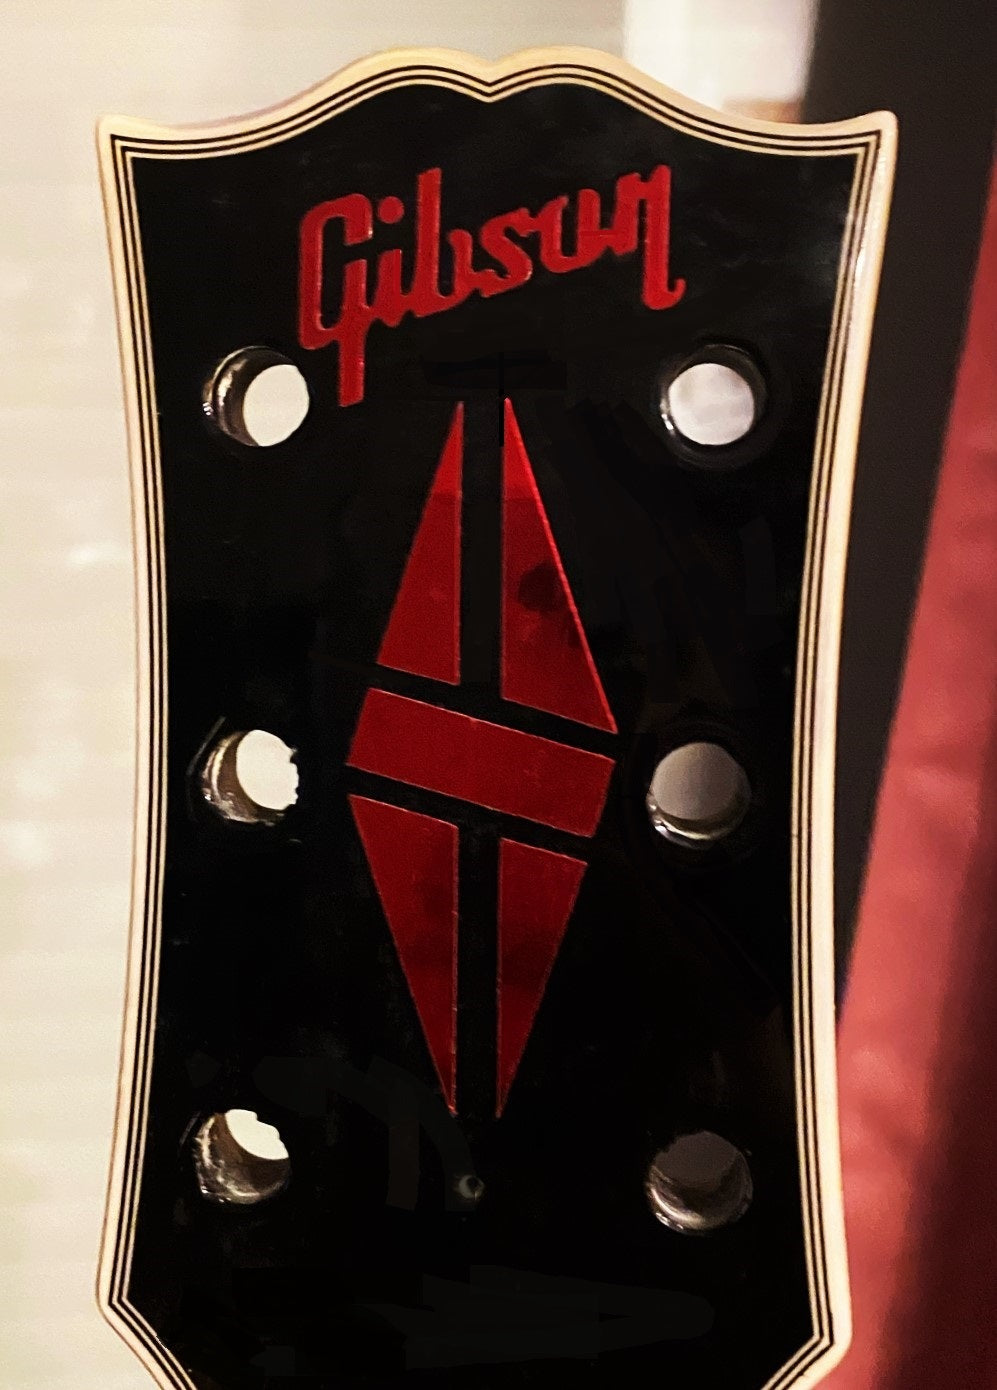 TWO Gibson Guitar Headstock Logos & 1 Split Diamond, Metallized Decal, Rose Chromium OEM Size